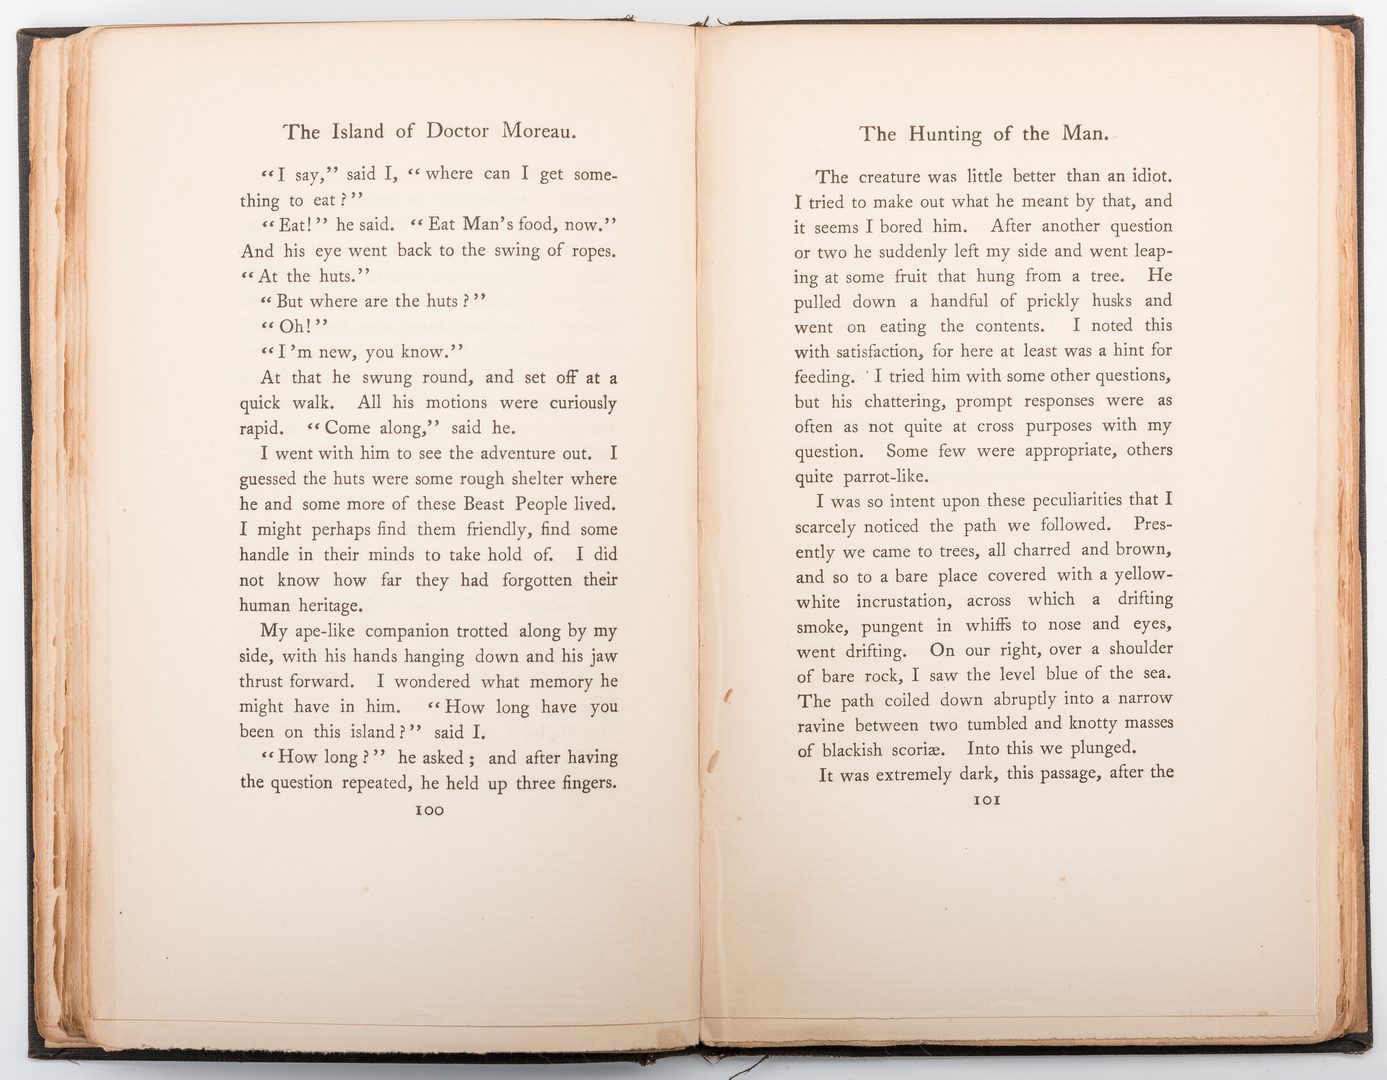 Lot 550: H. G. Wells: Island of Dr. Moreau, 1st Ed.